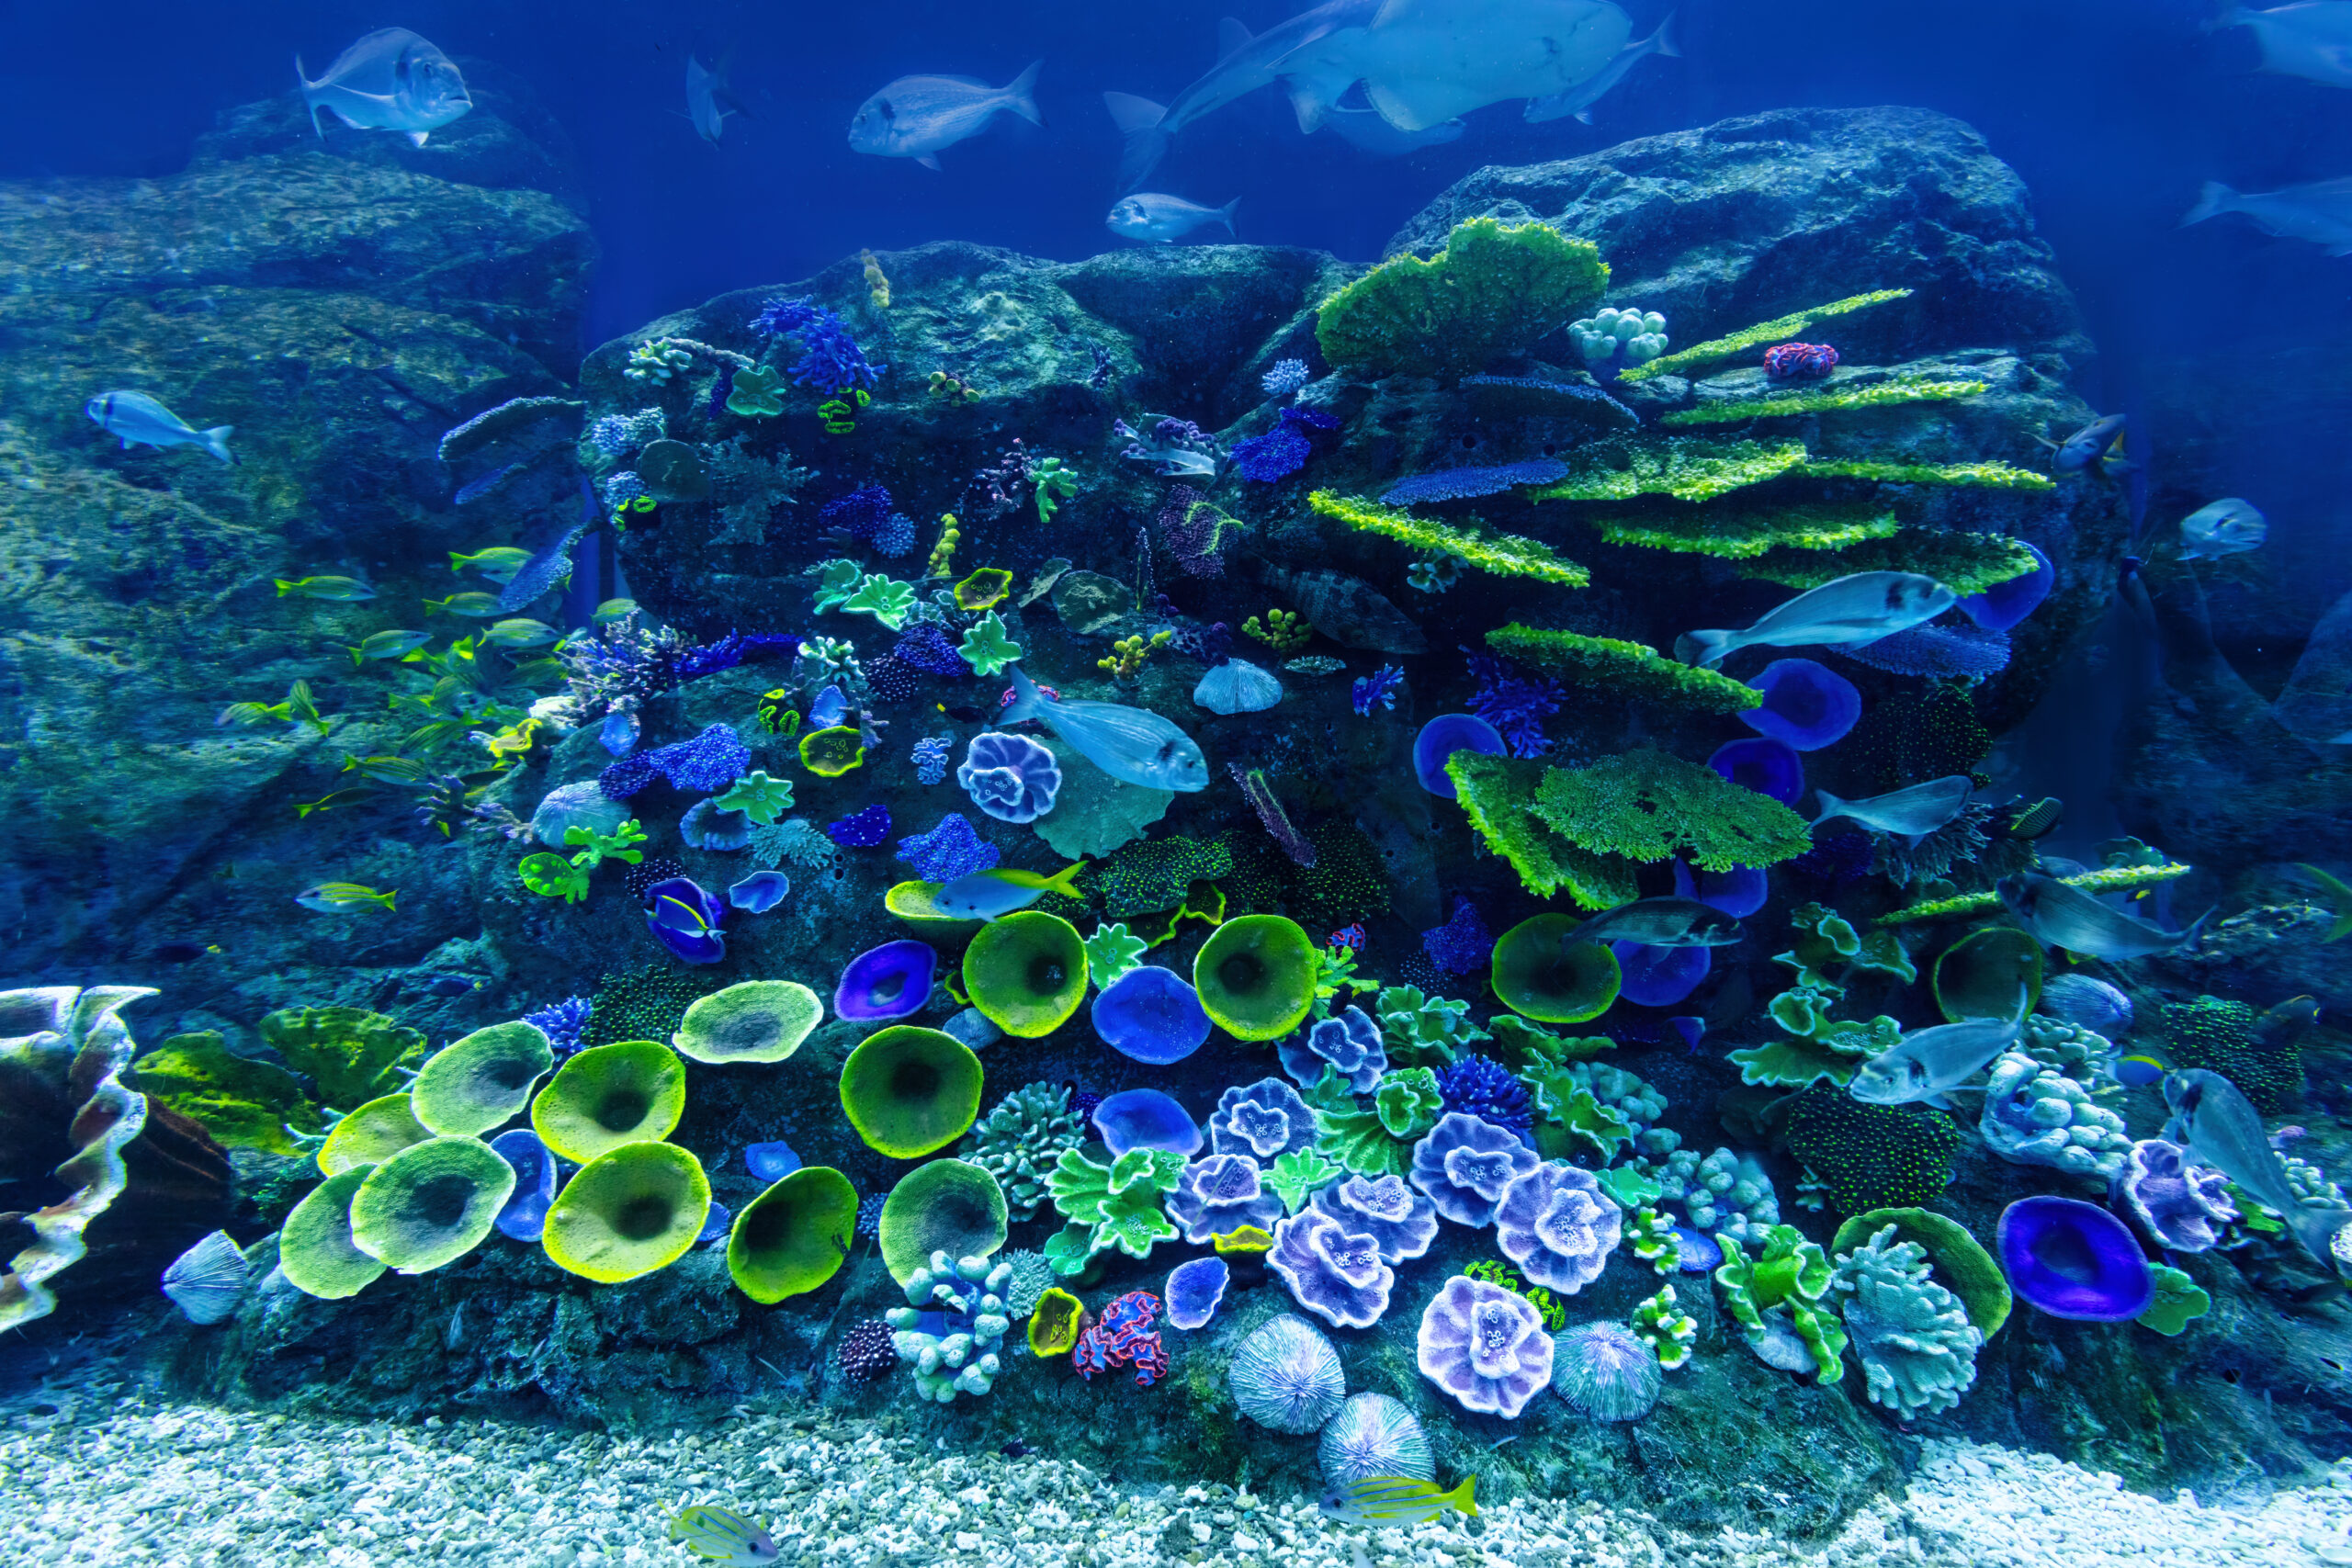 Shallow Seas – Continental Shelf, Coral, Plankton and Kelp